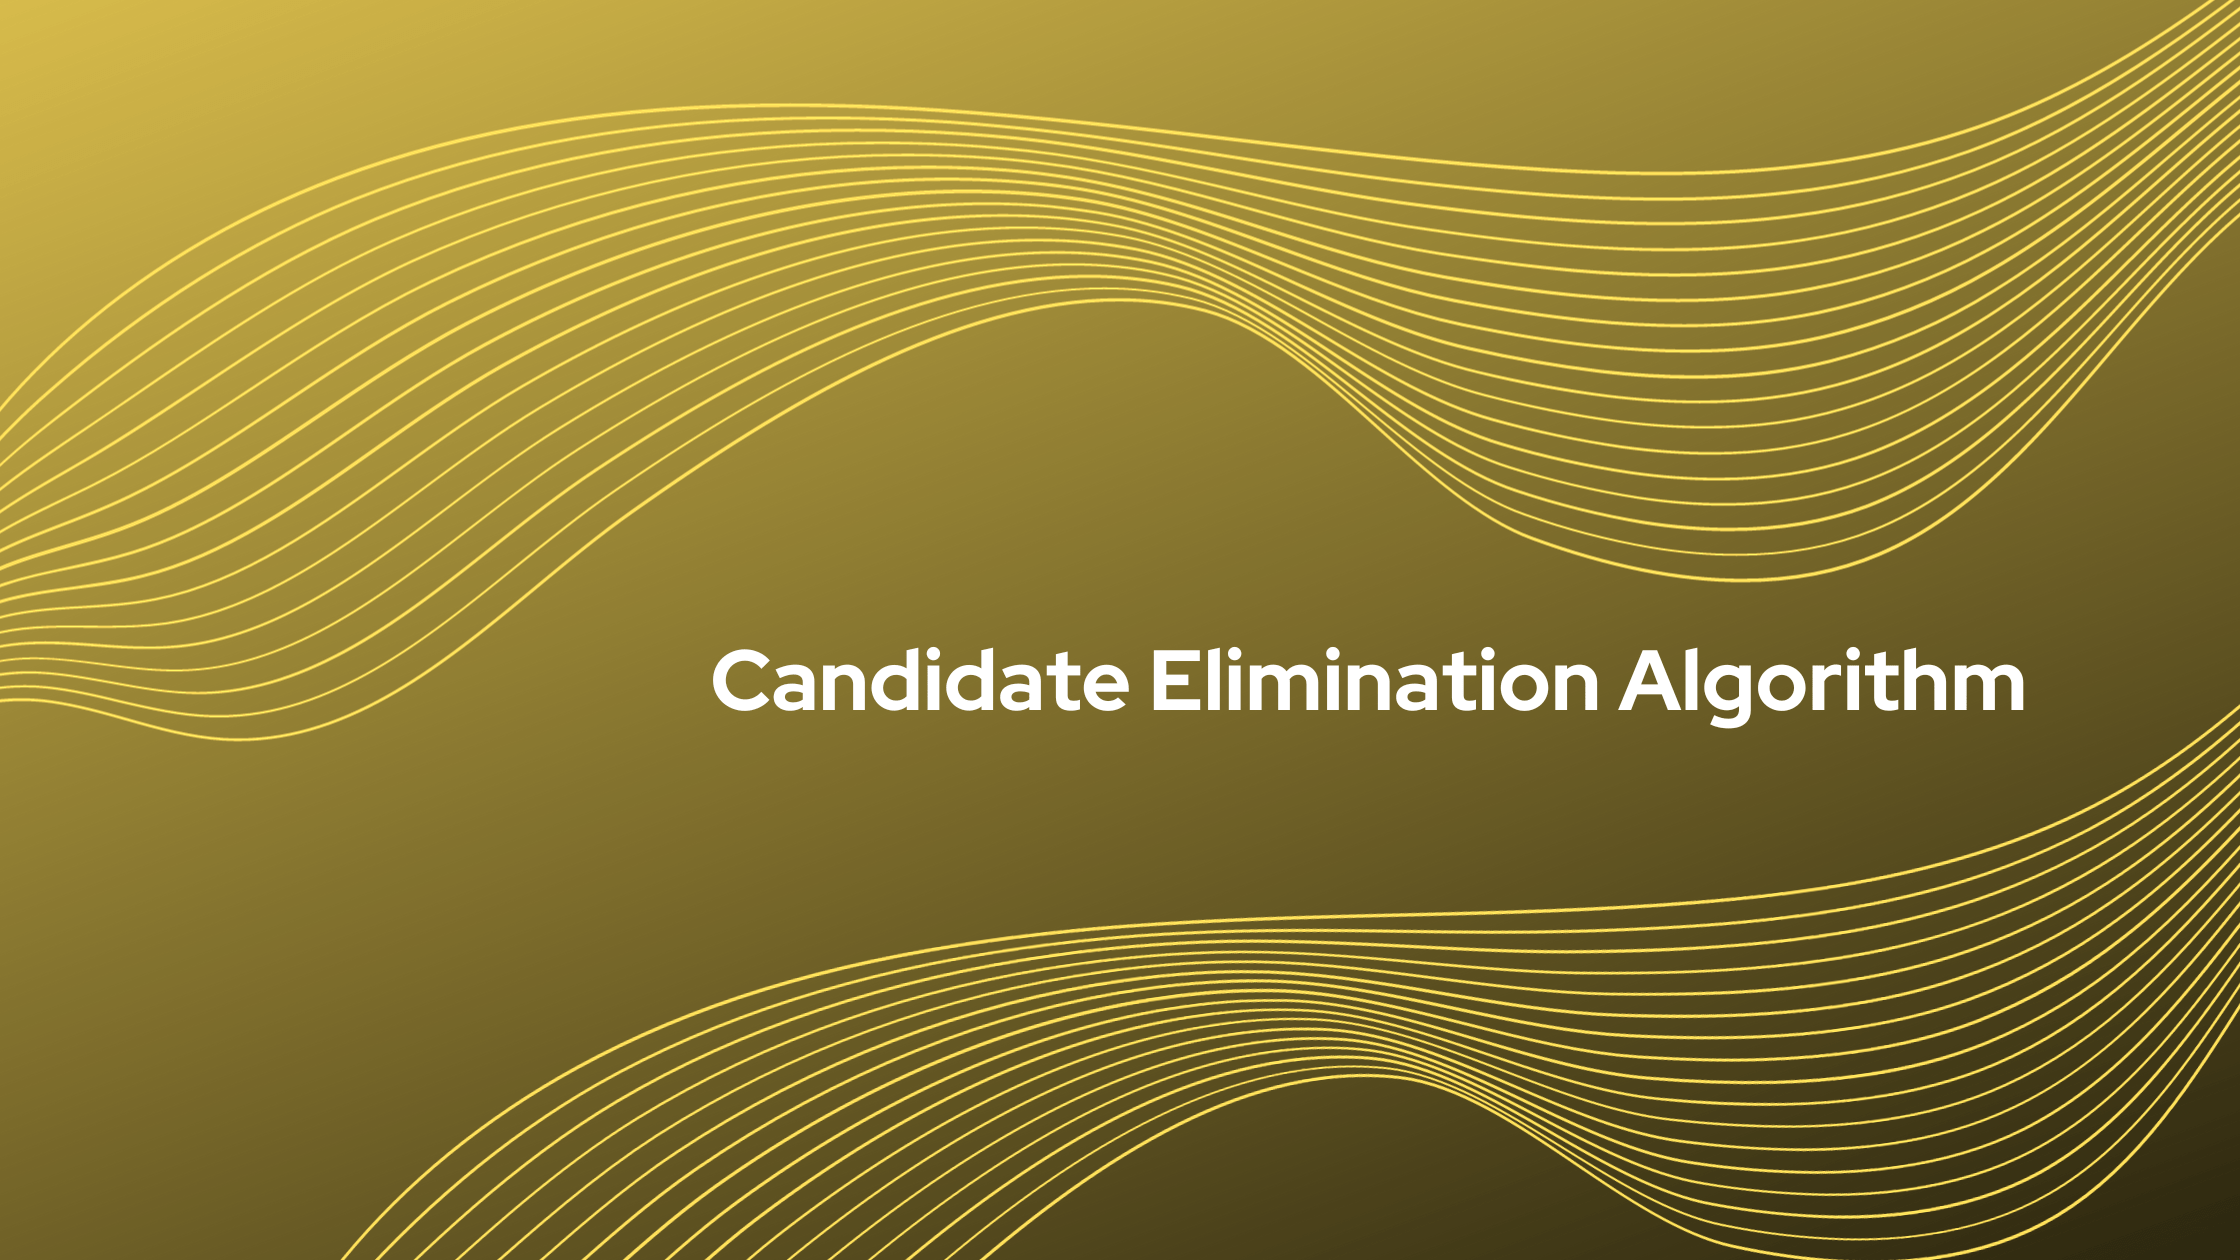 Candidate Elimination Algorithm Program in Python